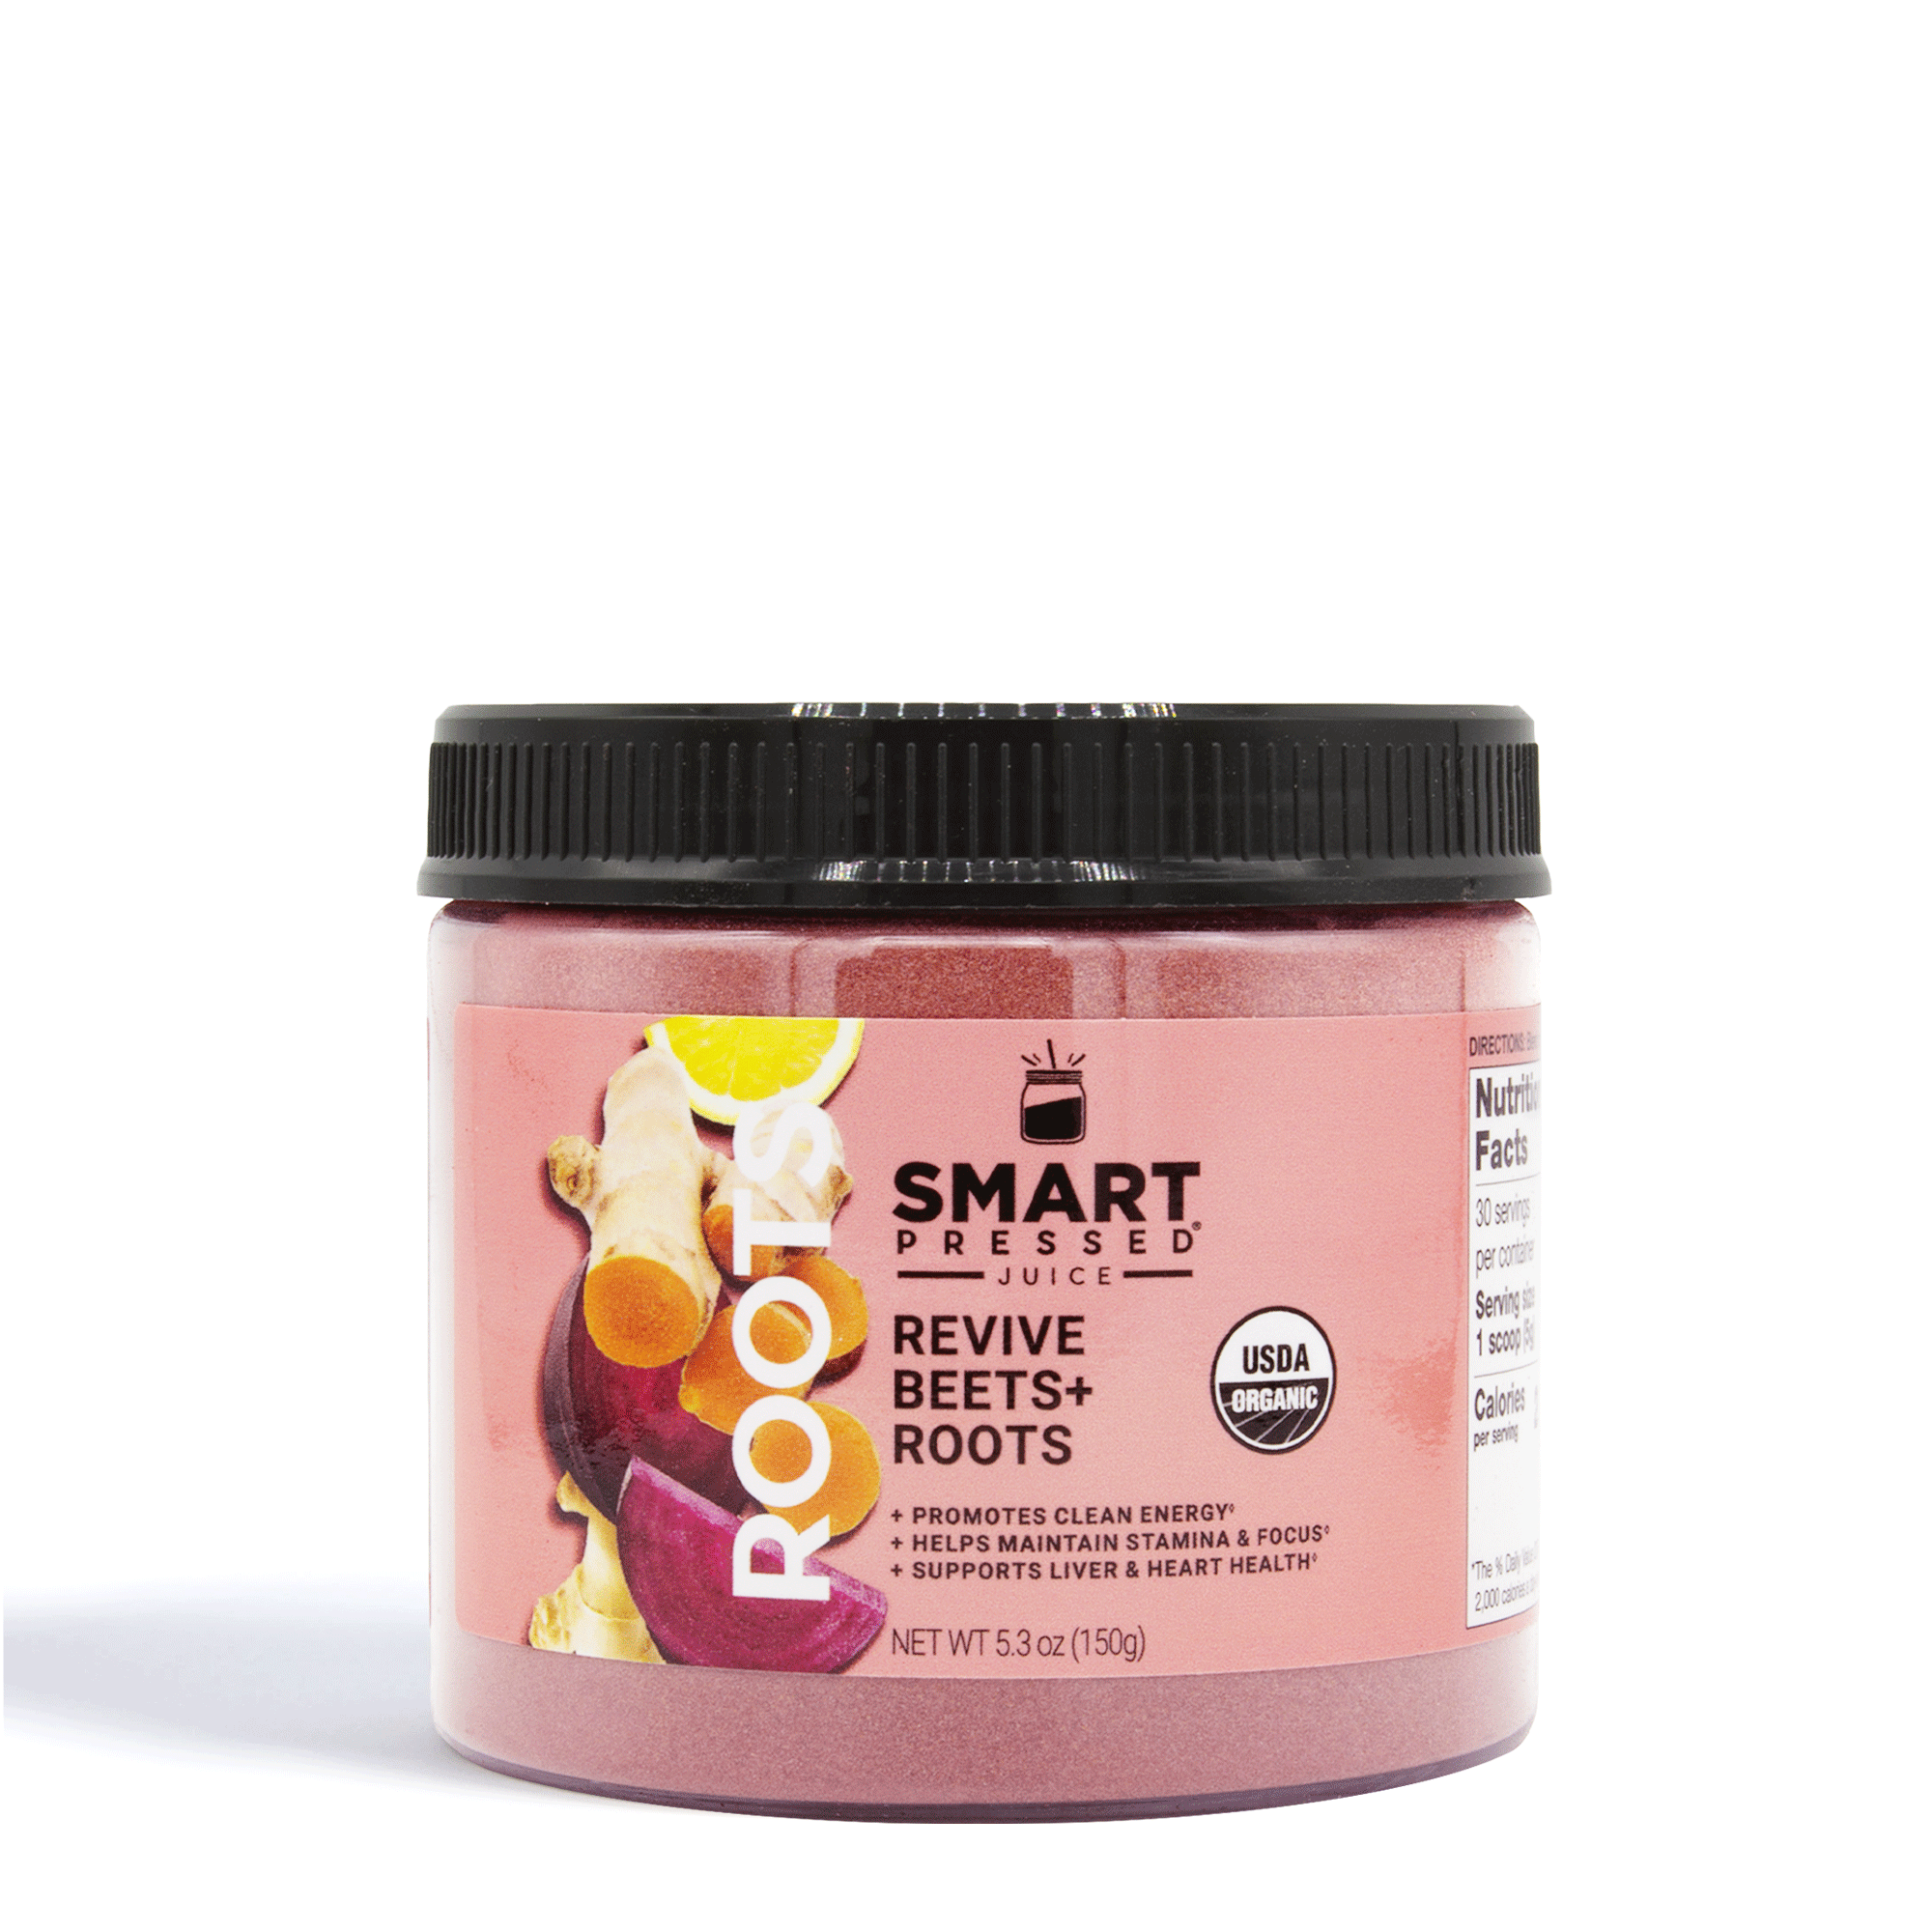 8 Slimming Protein Shake Hacks - Smart Pressed Juice